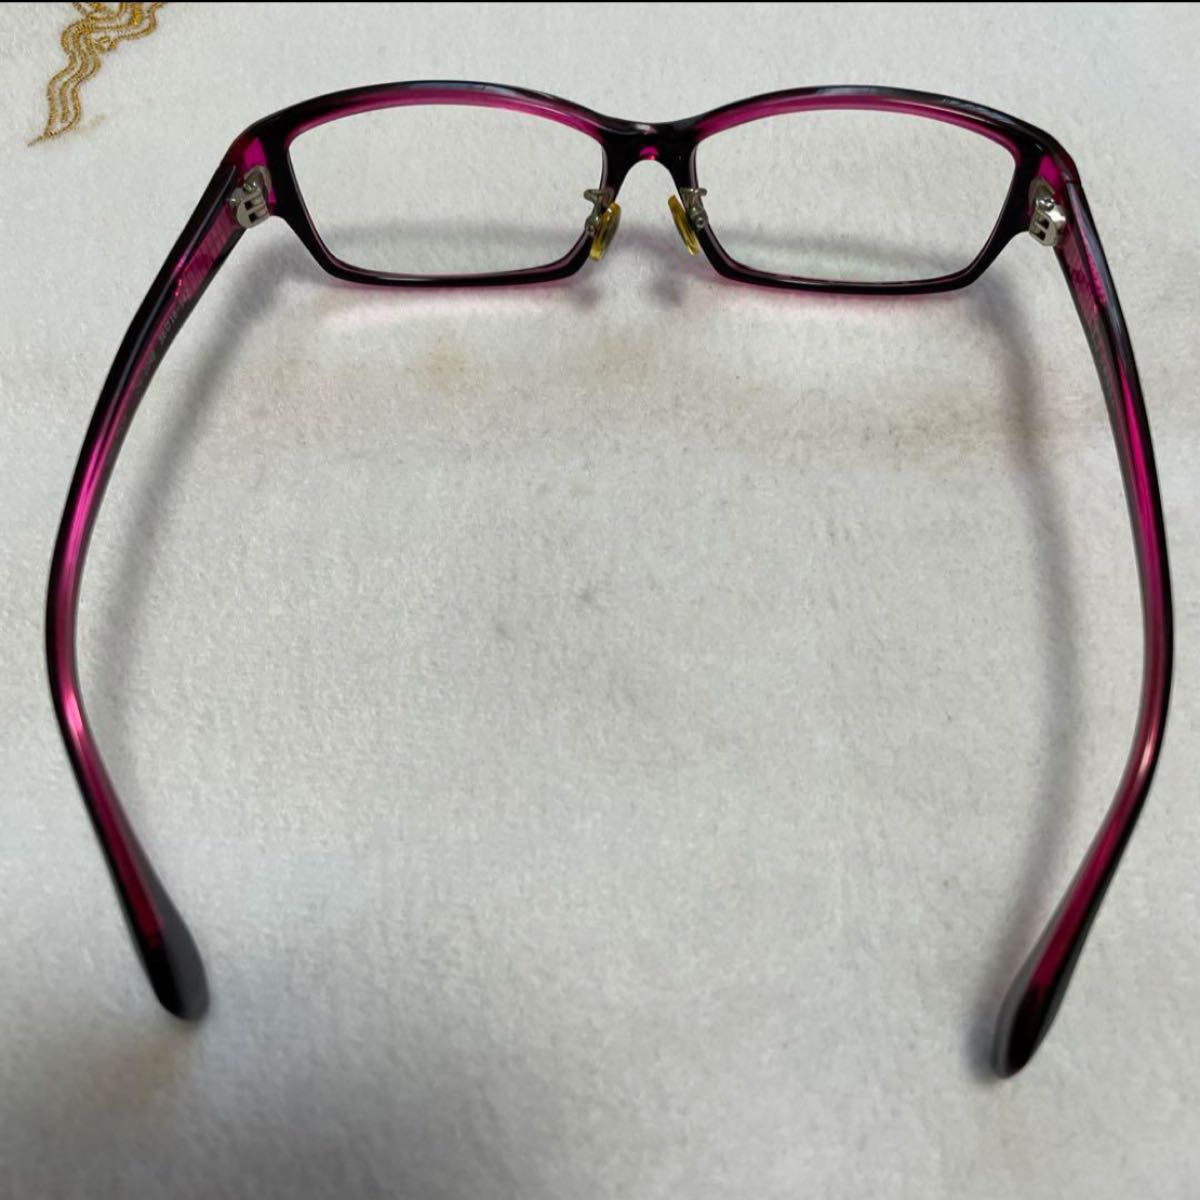 USED レディース眼鏡 メガネ メガネフレーム 眼鏡